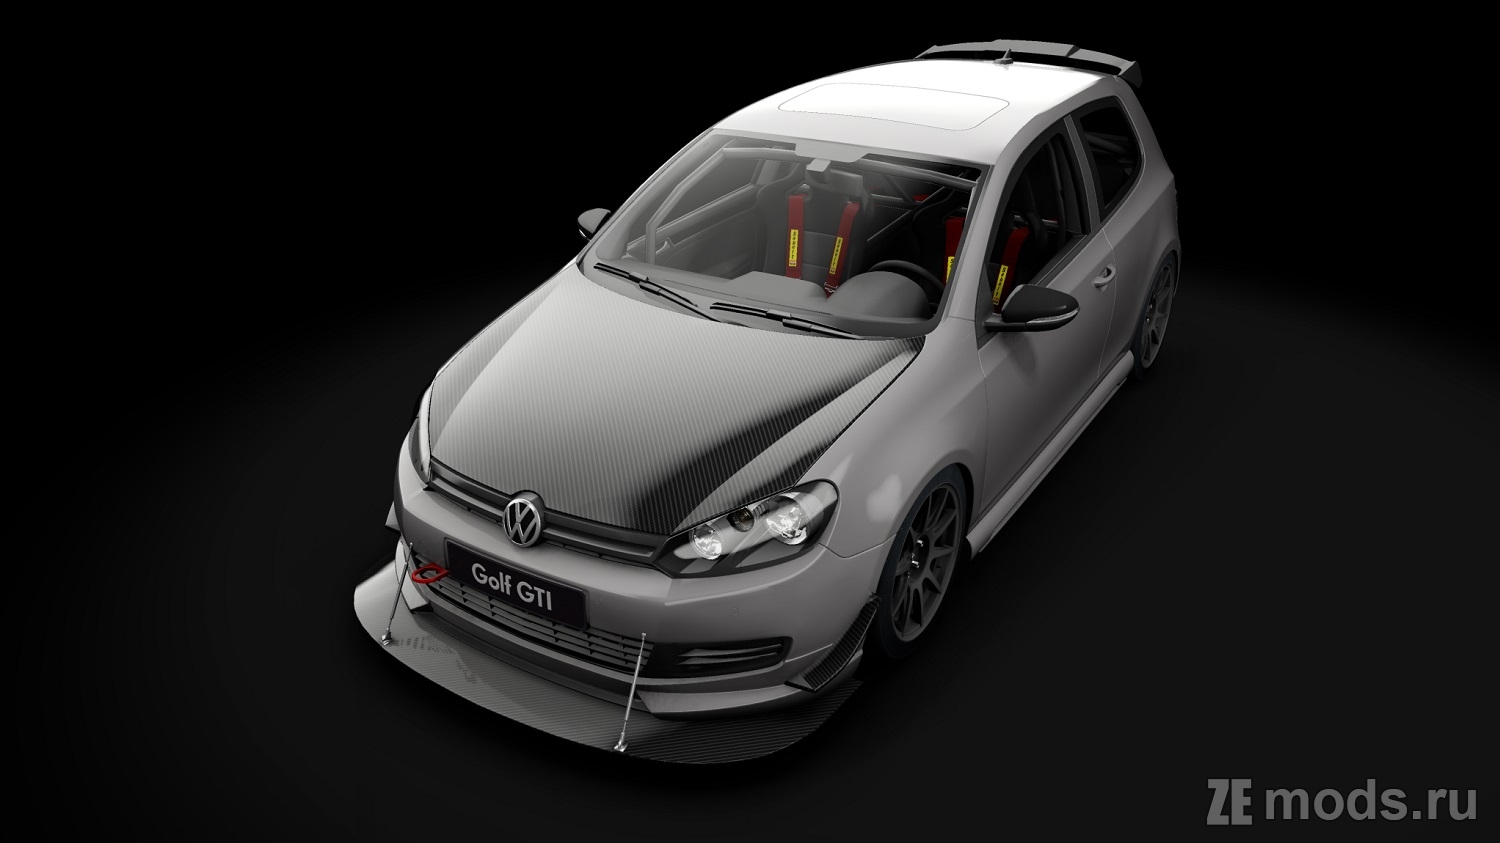 Мод Volkswagen Golf GTi 2010 Track для Assetto Corsa